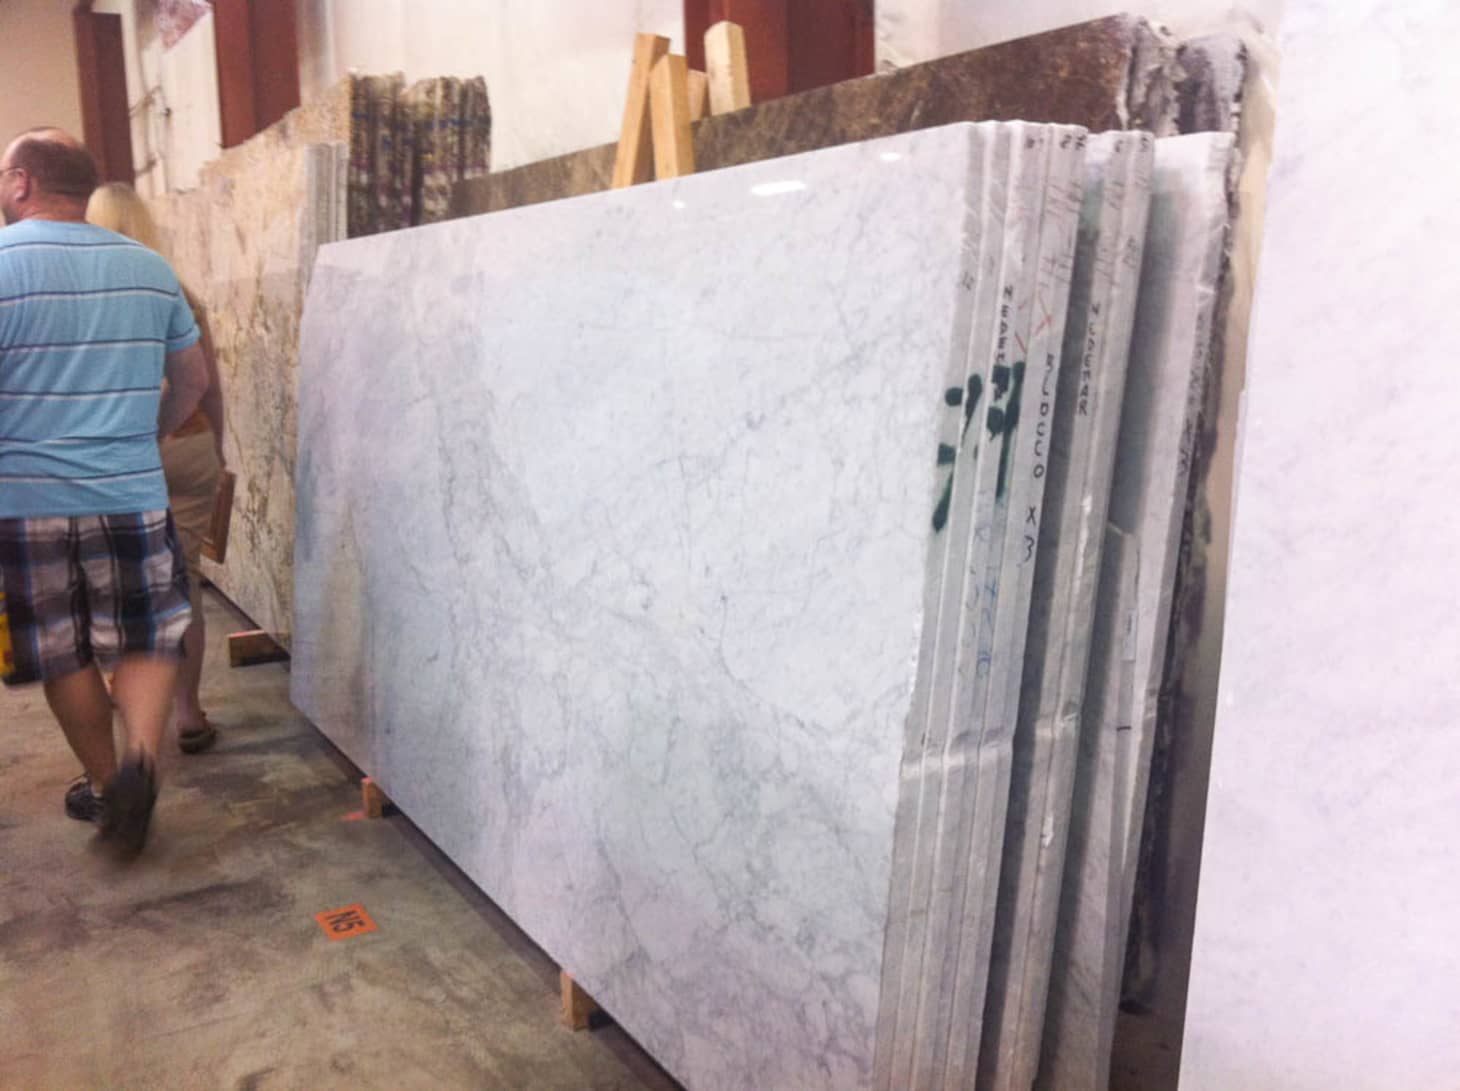 Faith S Kitchen Renovation How We Finally Got Our Carrara Marble